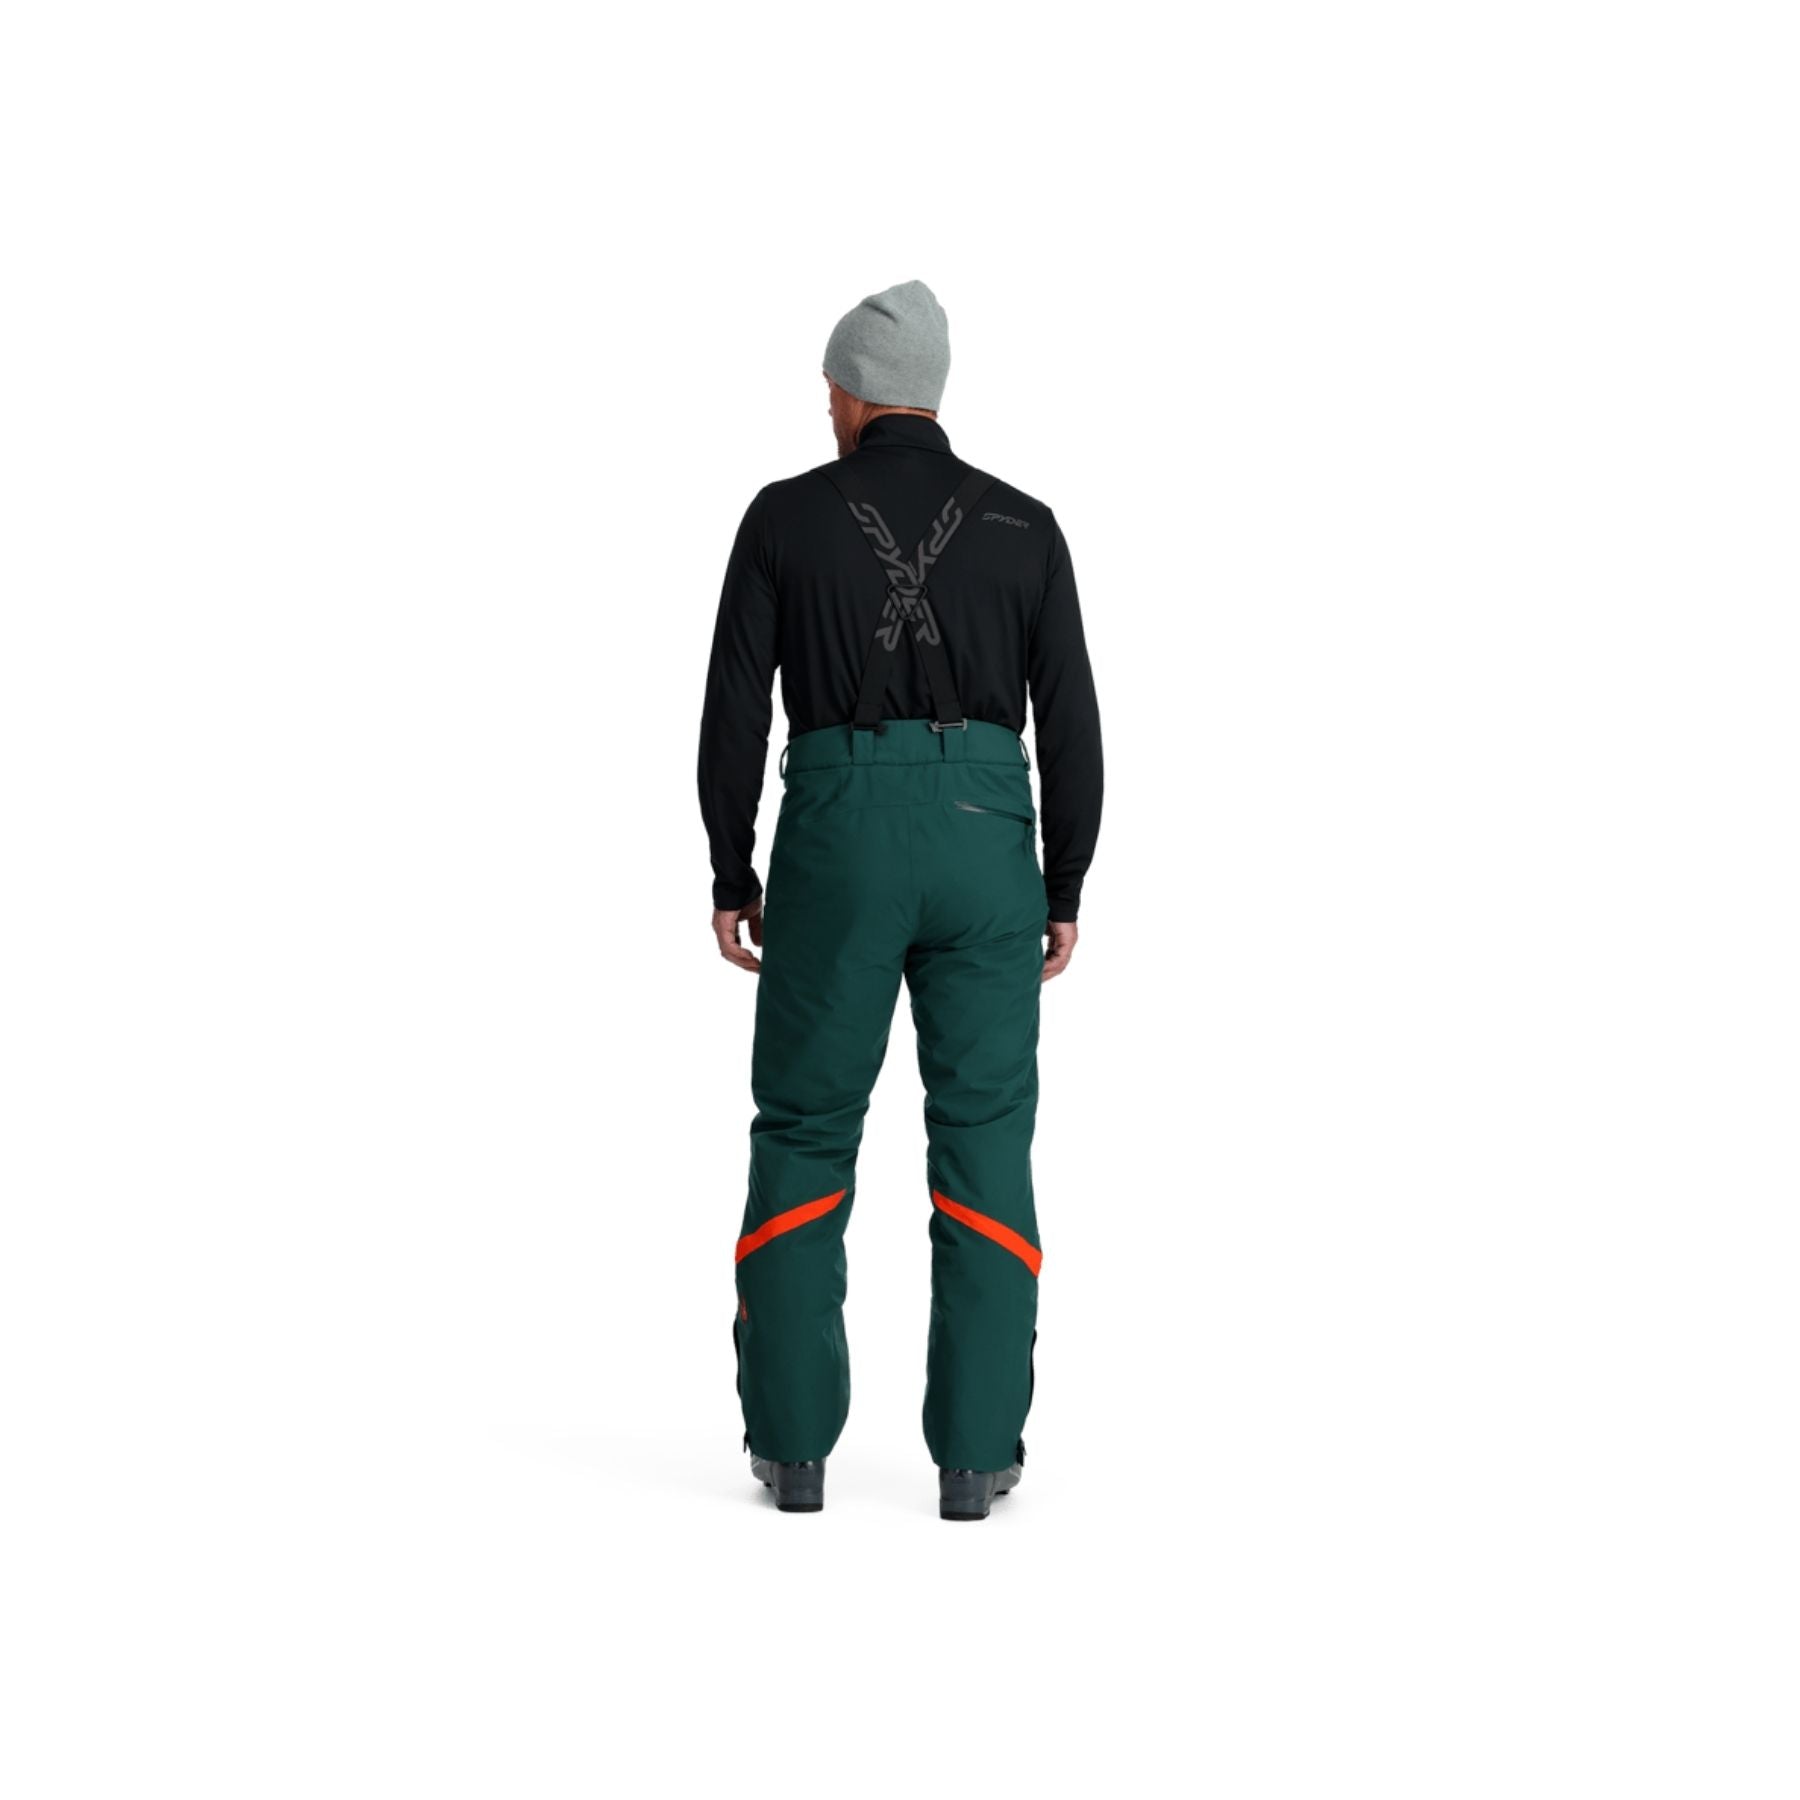 Spyder Propulsion Pants in Cypress Green